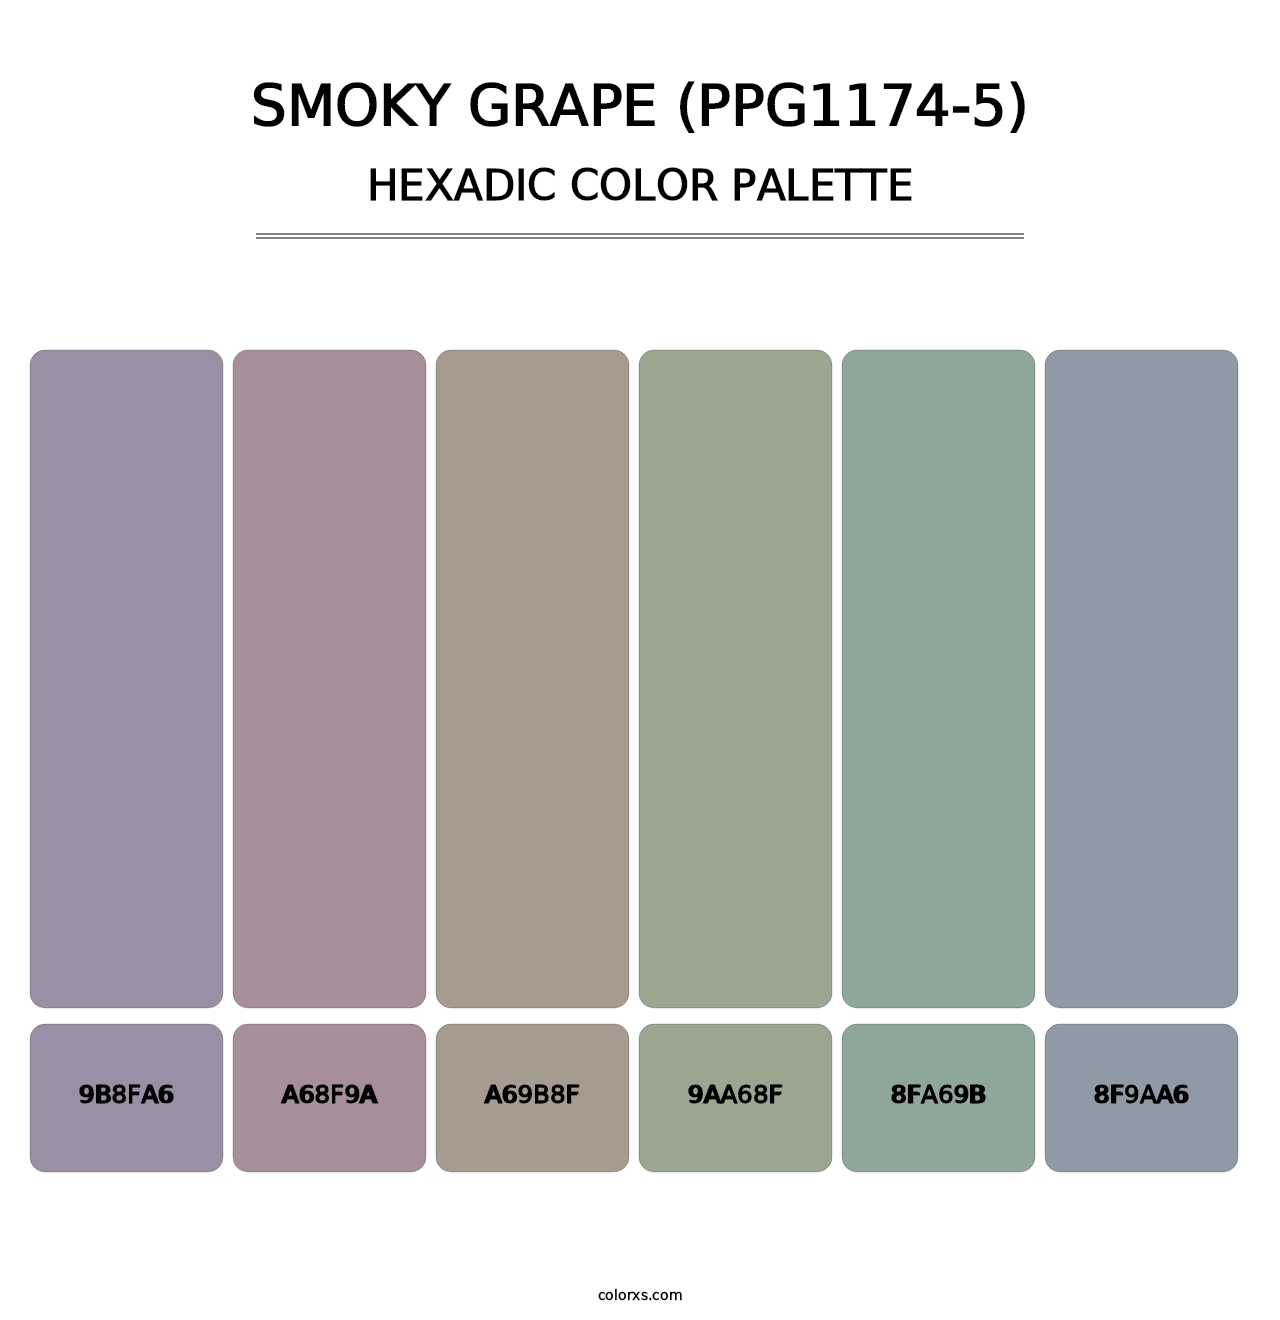 Smoky Grape (PPG1174-5) - Hexadic Color Palette